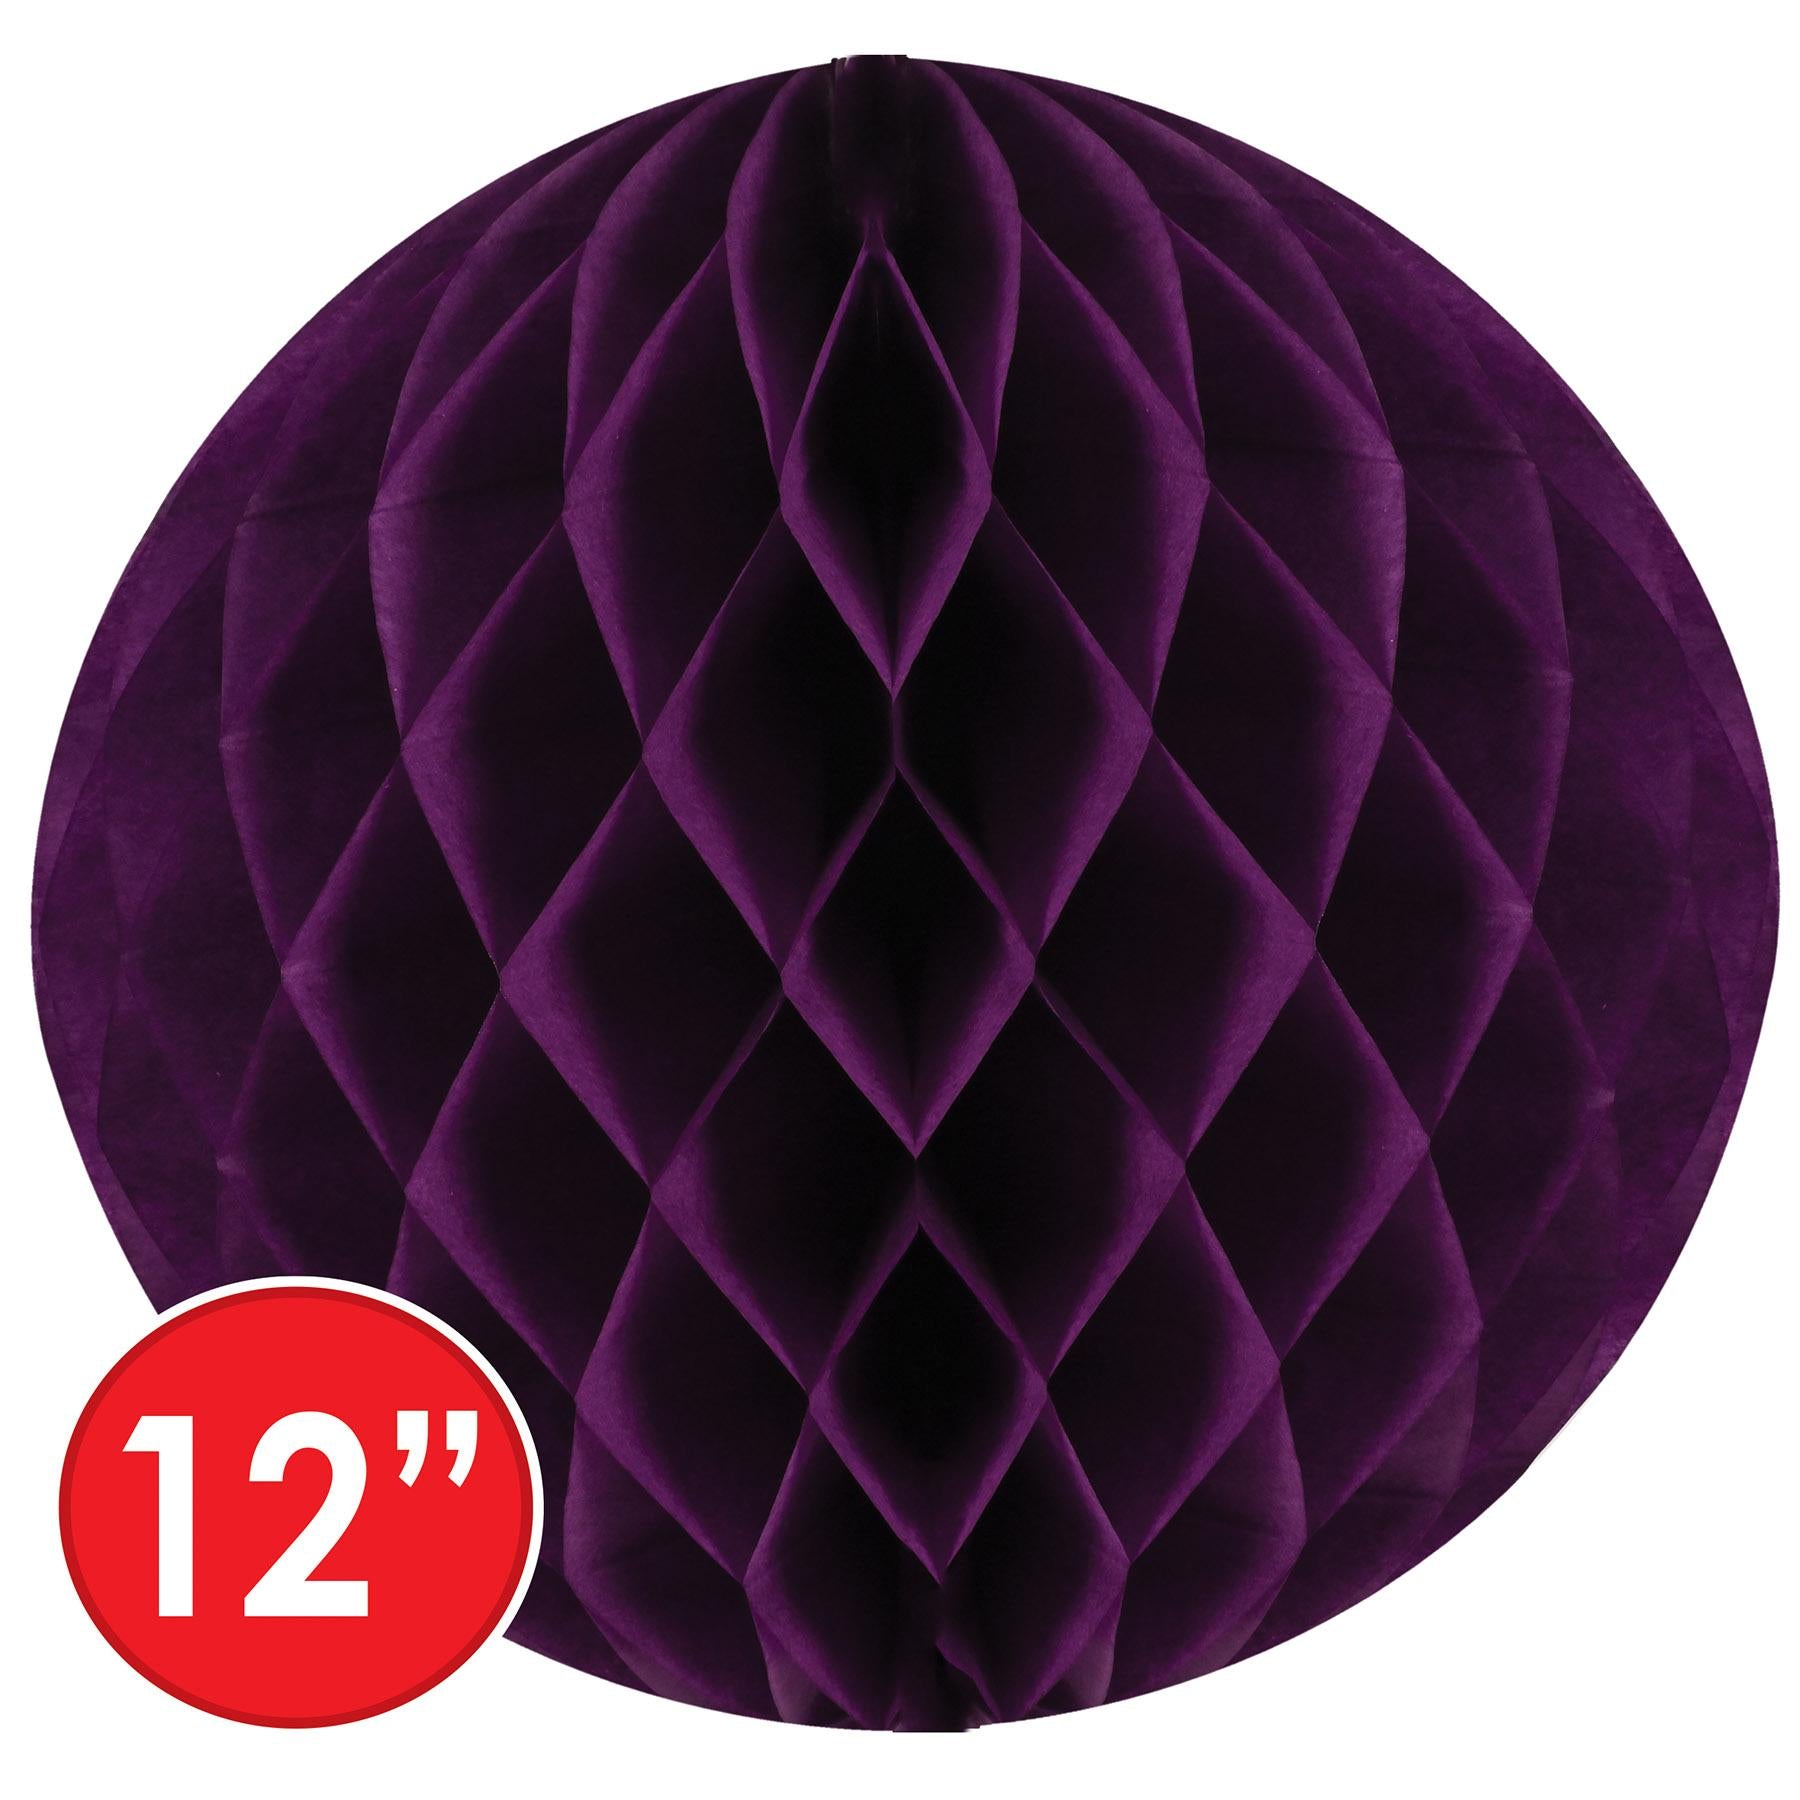 Beistle Party Tissue Ball - purple